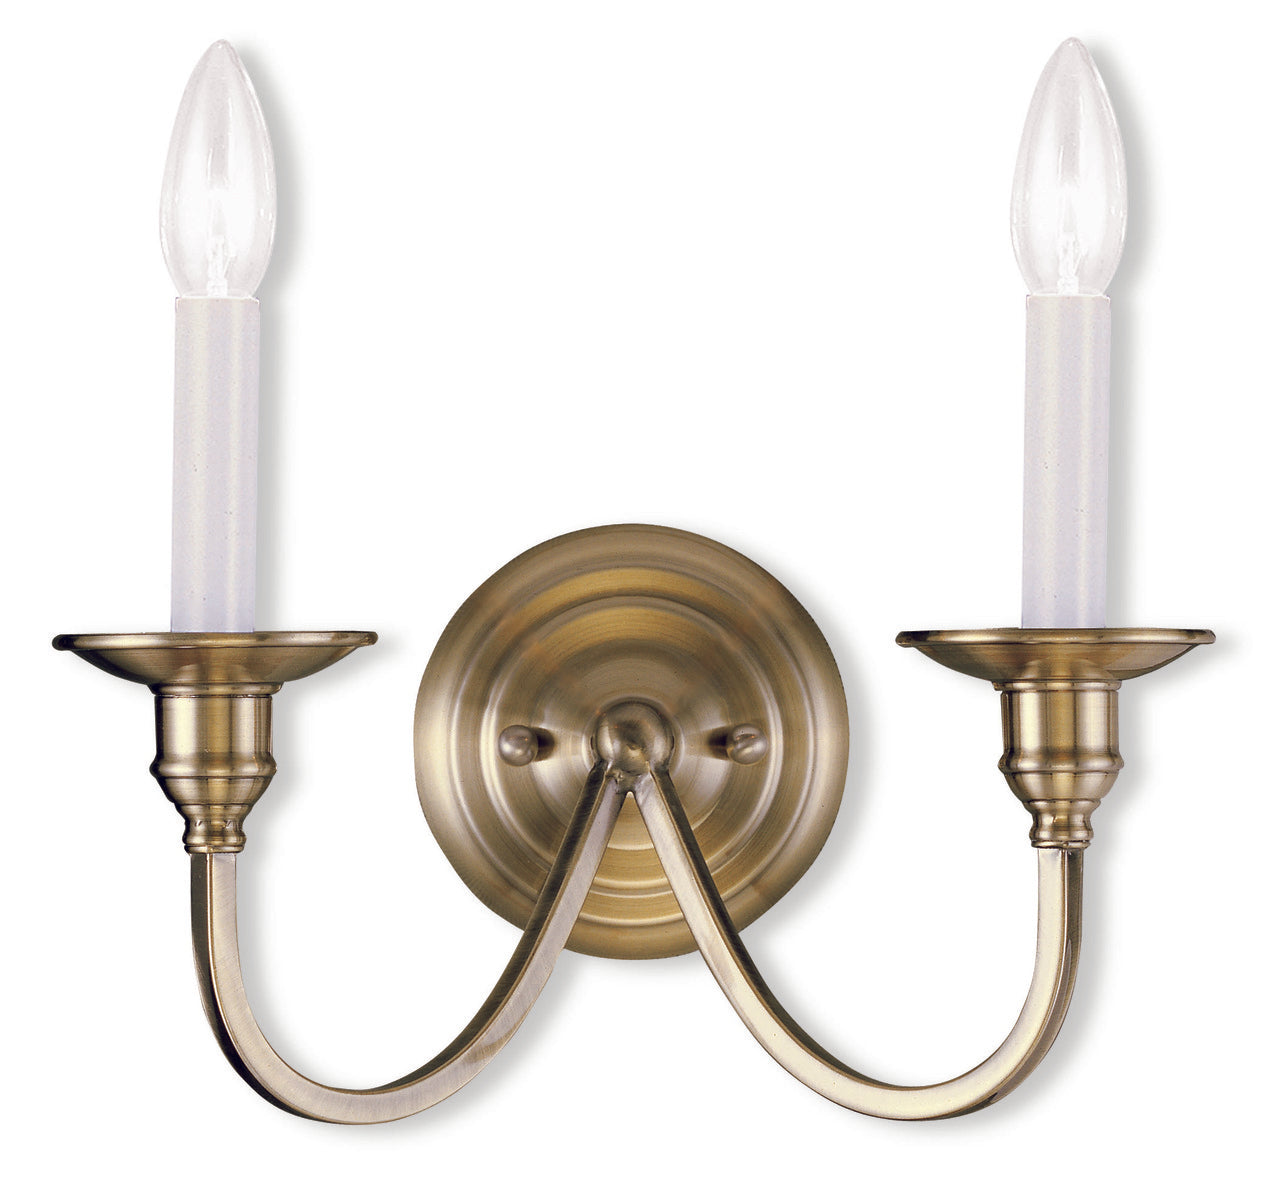 LIVEX Lighting 5142-01 Cranford Wall Sconce in Antique Brass (2 Light)